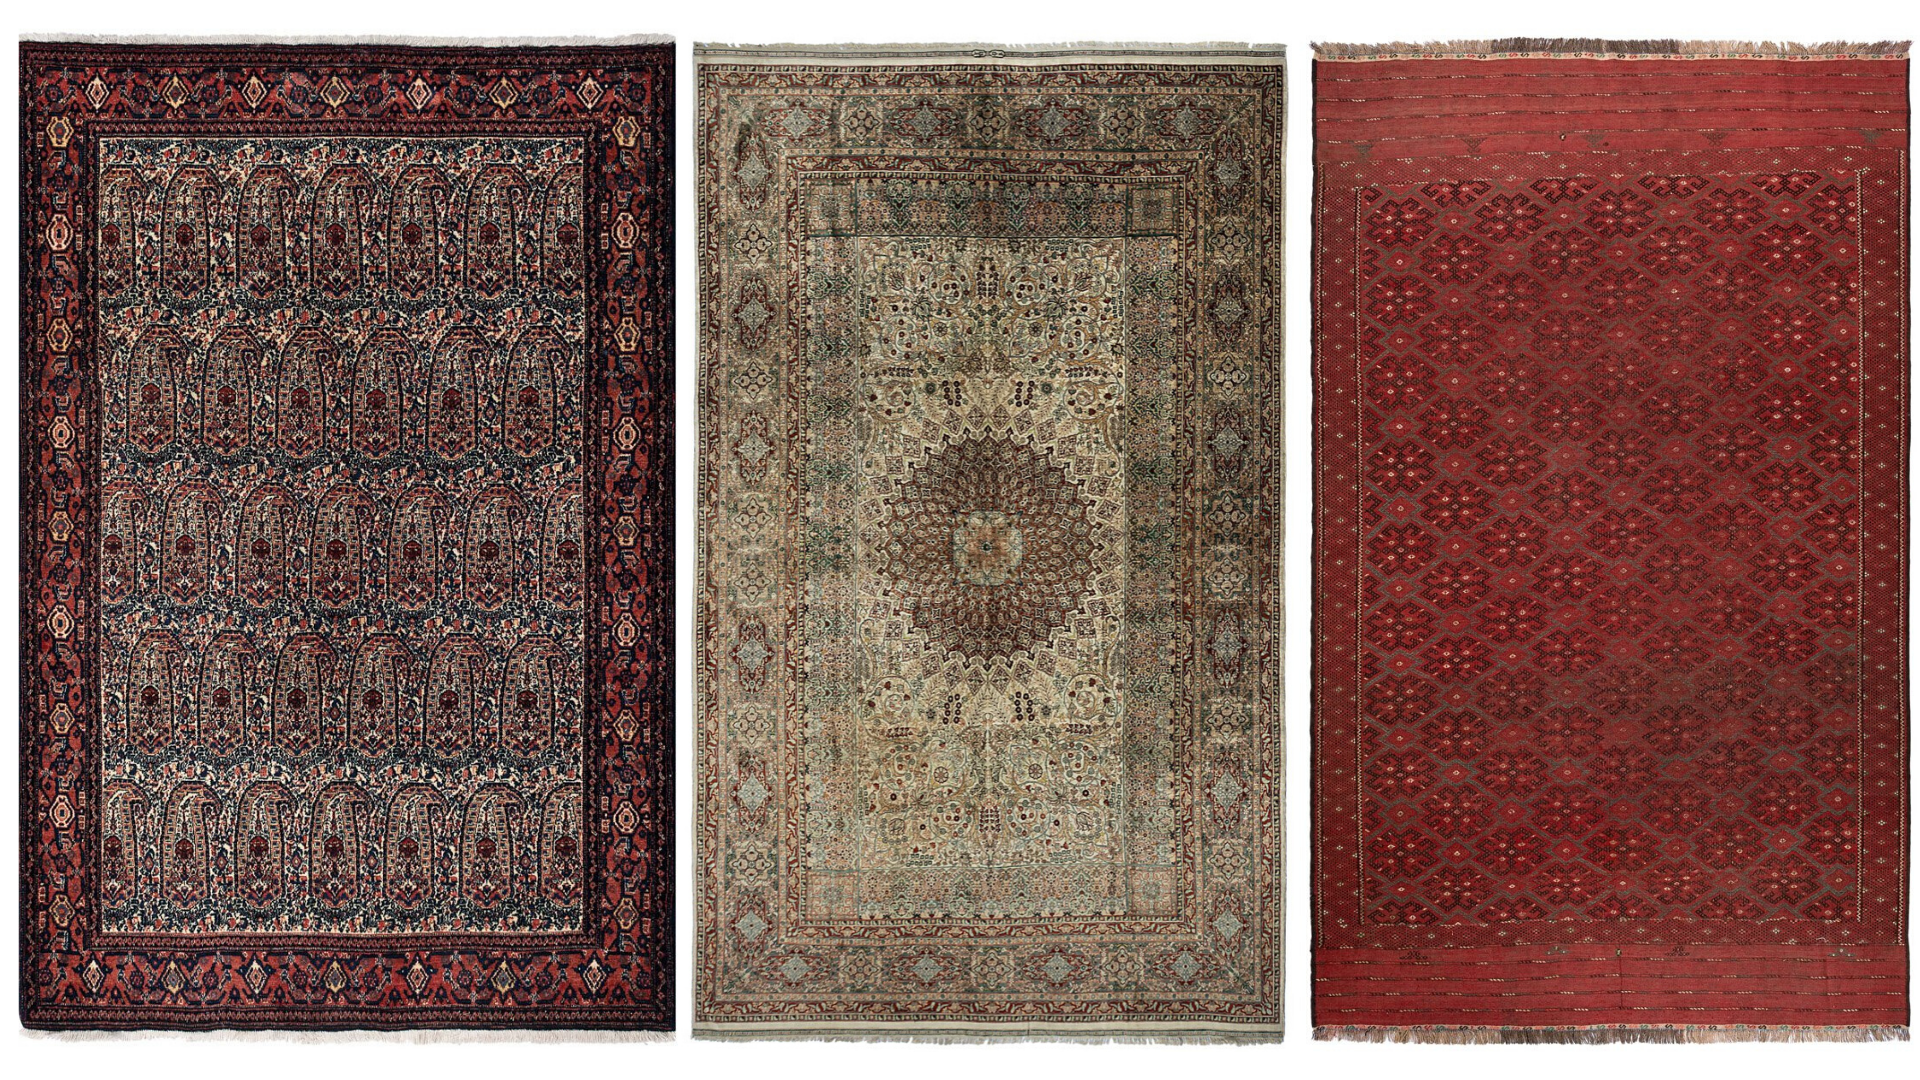 Persianr ugs, oriental rugs, vintage rugs, antique rugs, persian vintage rugs, london rugs, uk rug collections, interior design, home accessories, design ideas, vintage decor